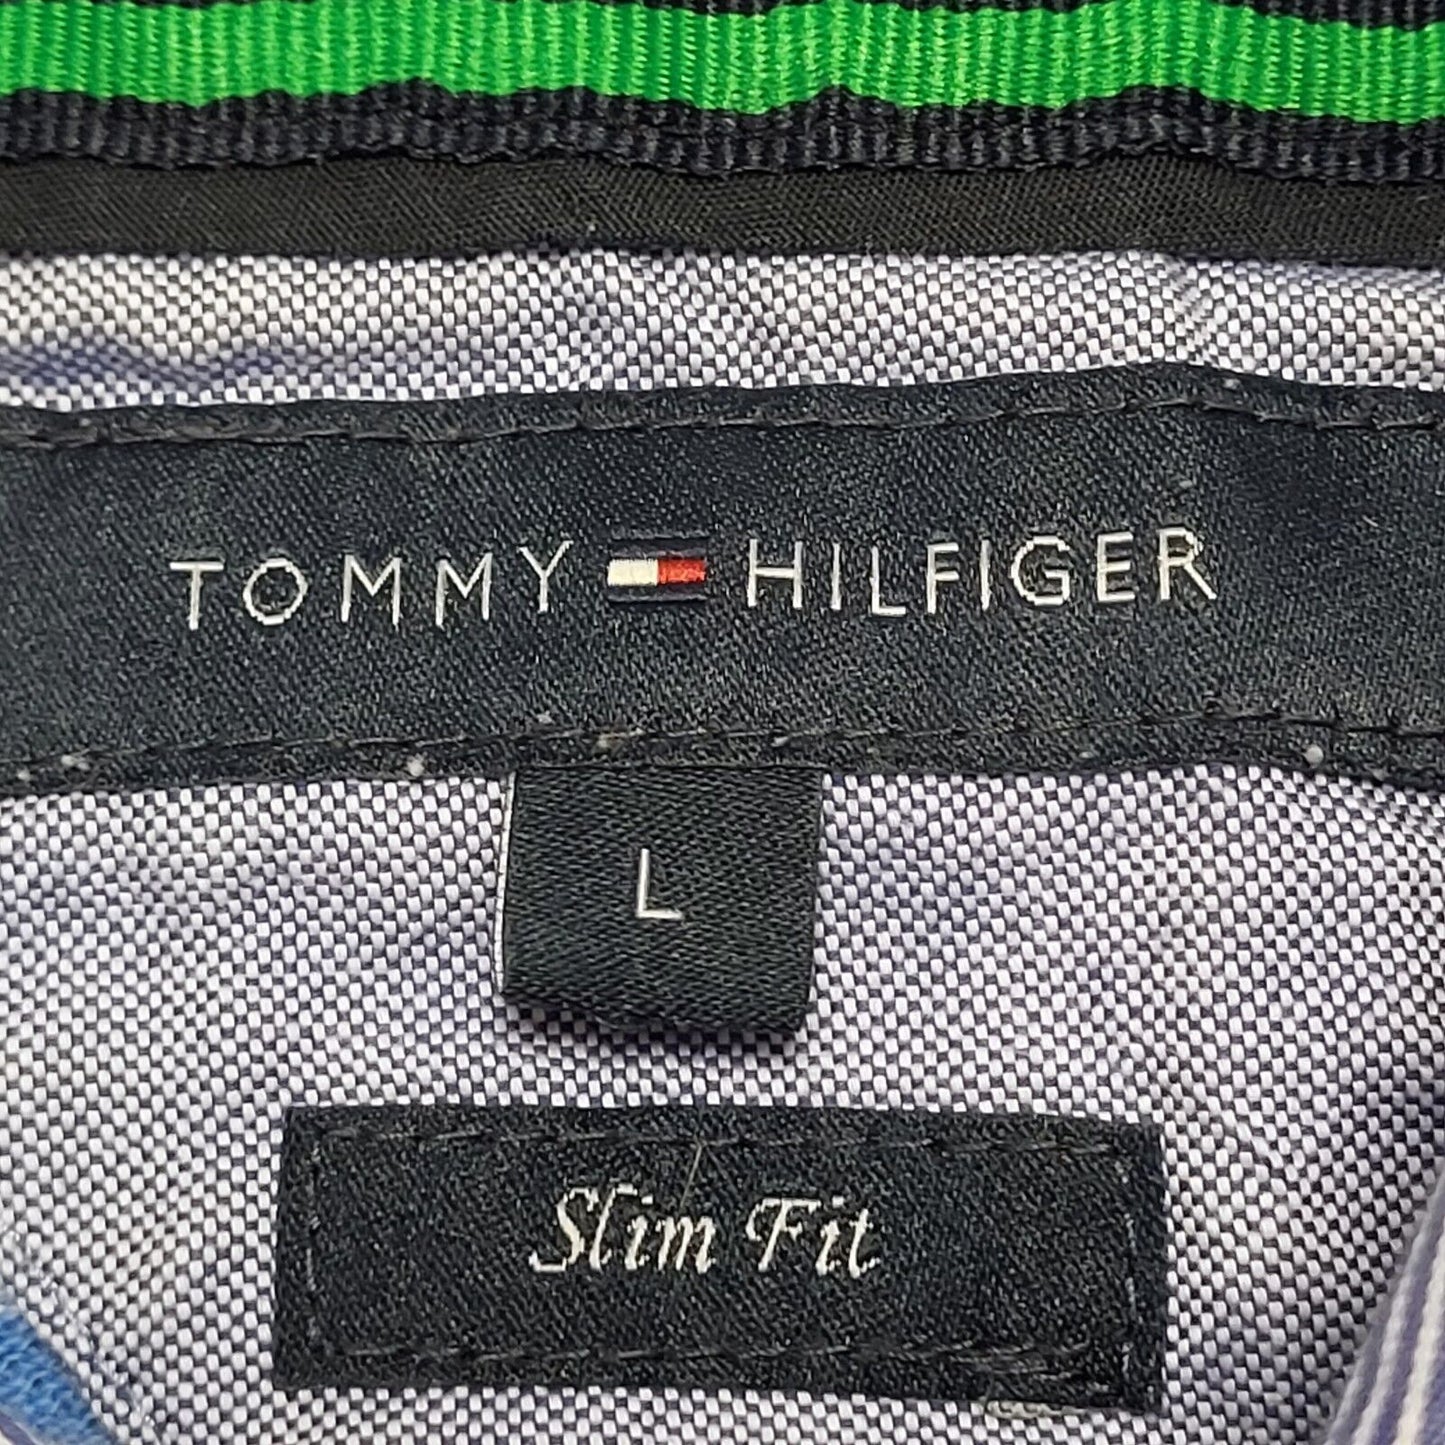 Tommy Hilfiger Polo (L)